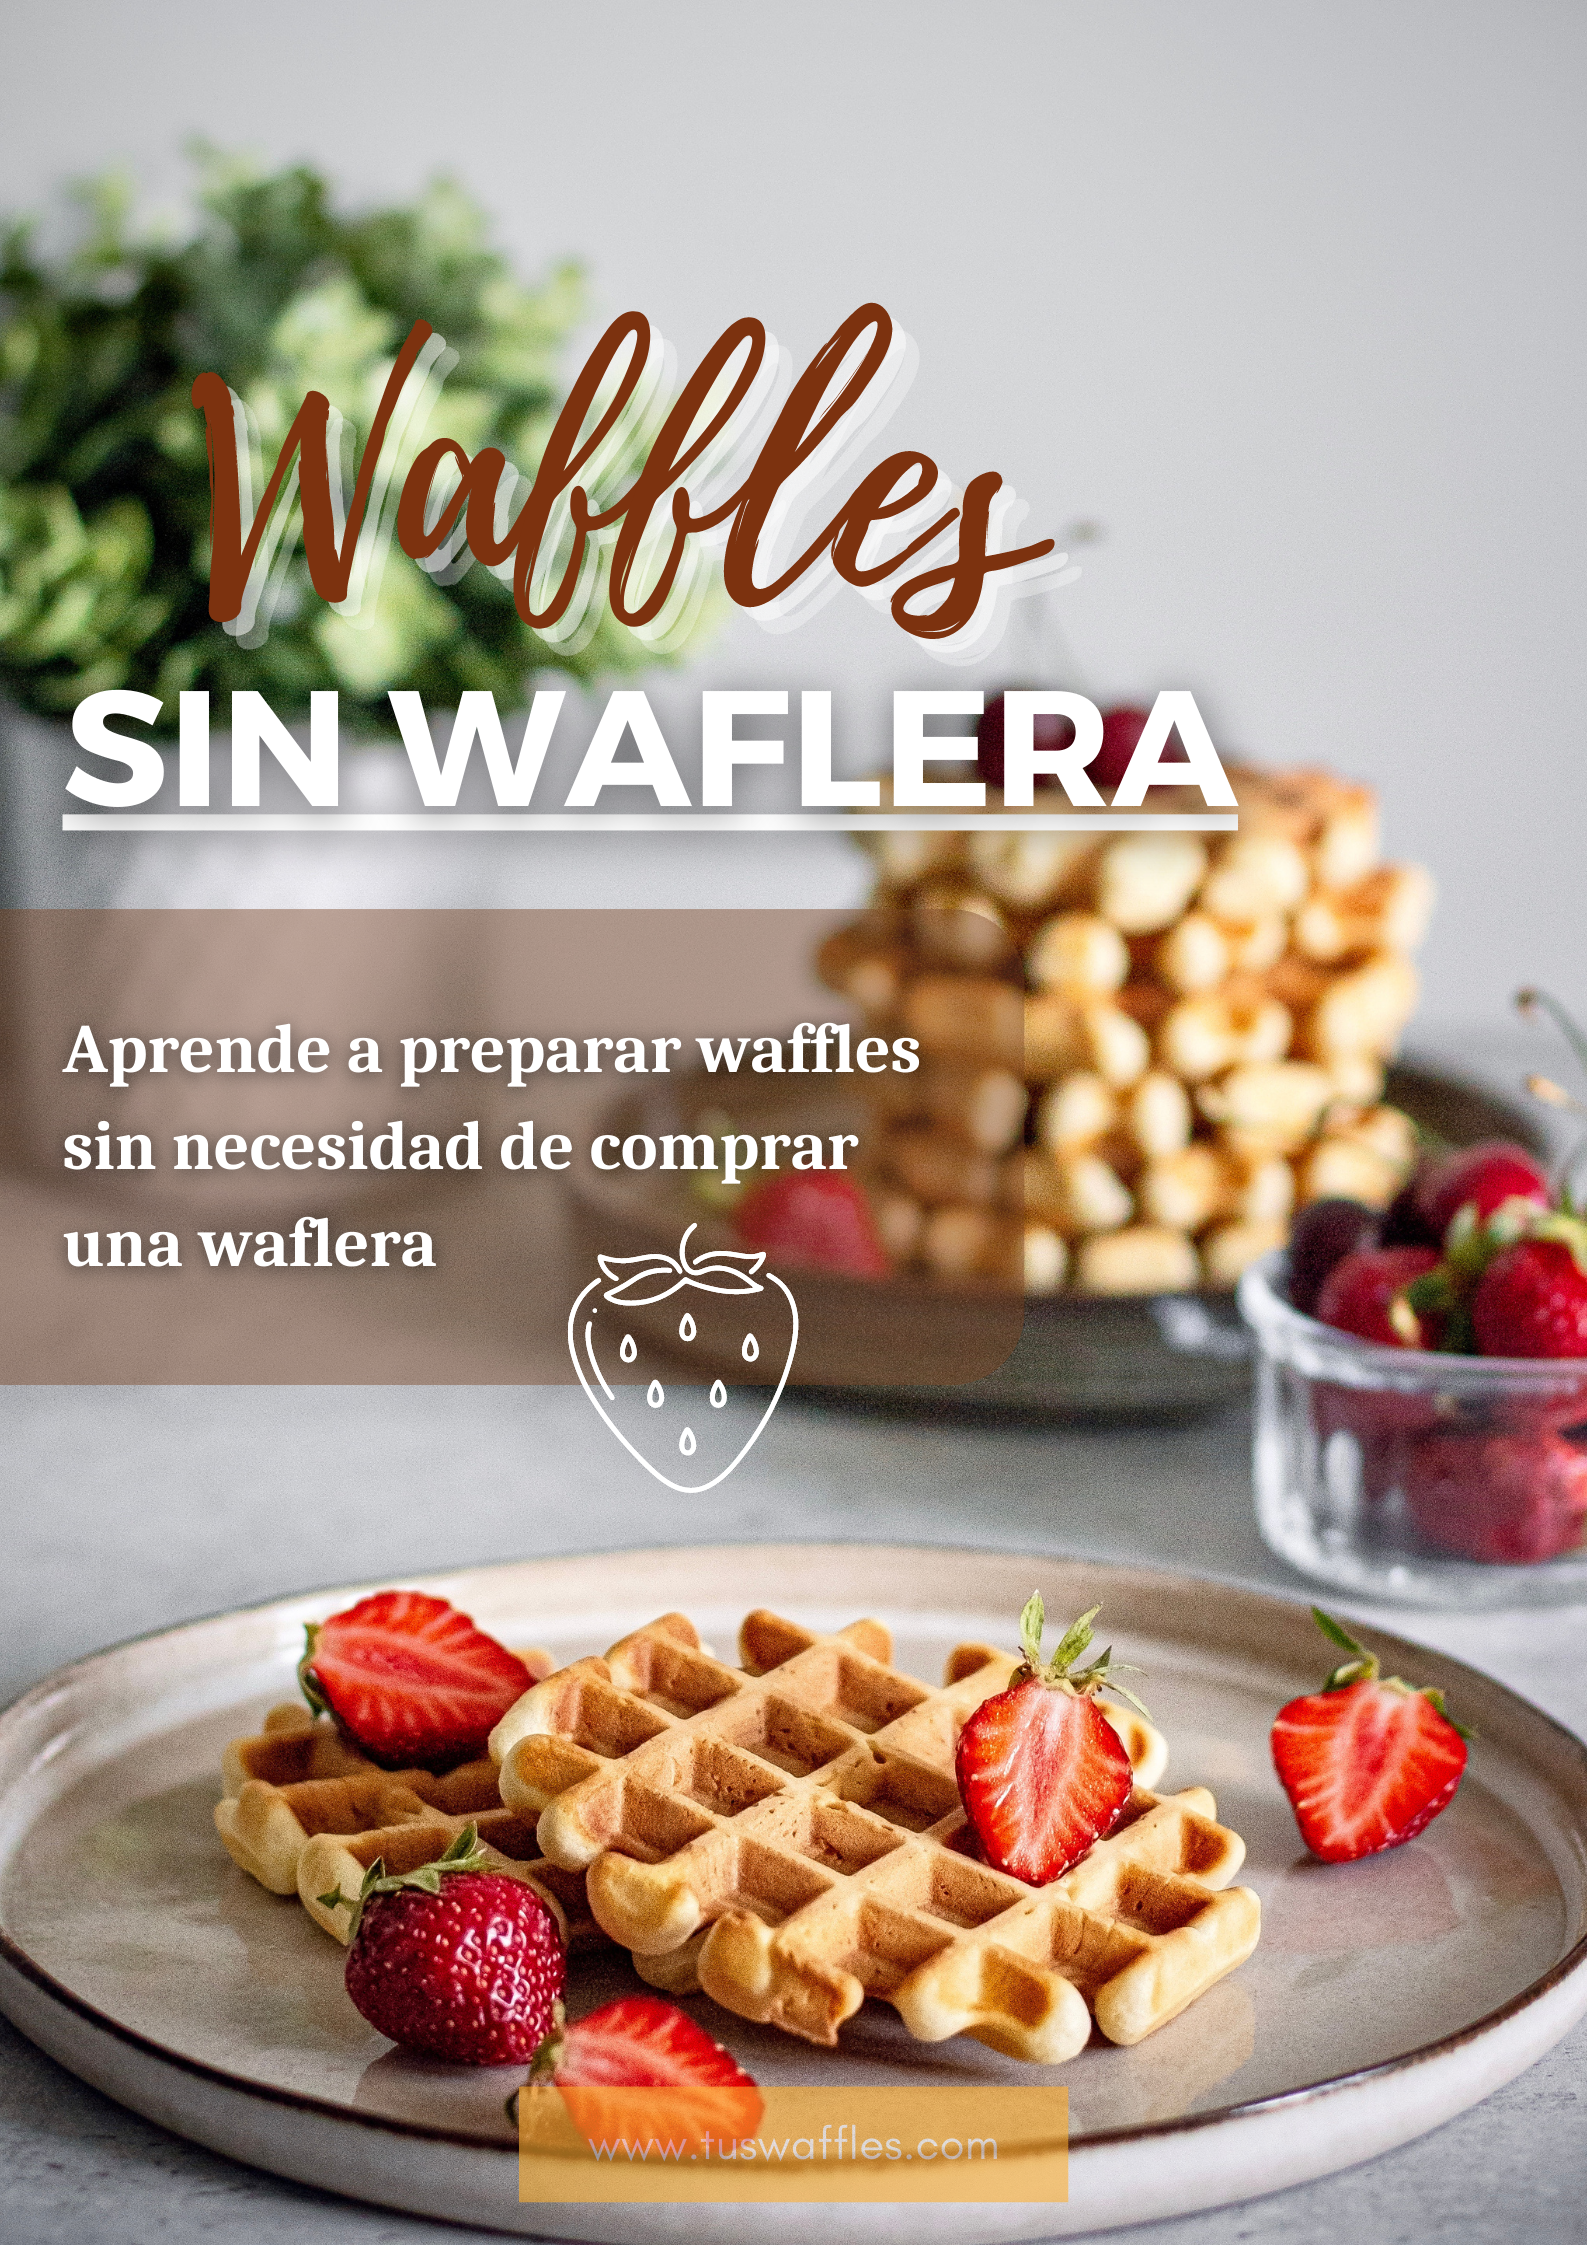 waffles-sin-waflera